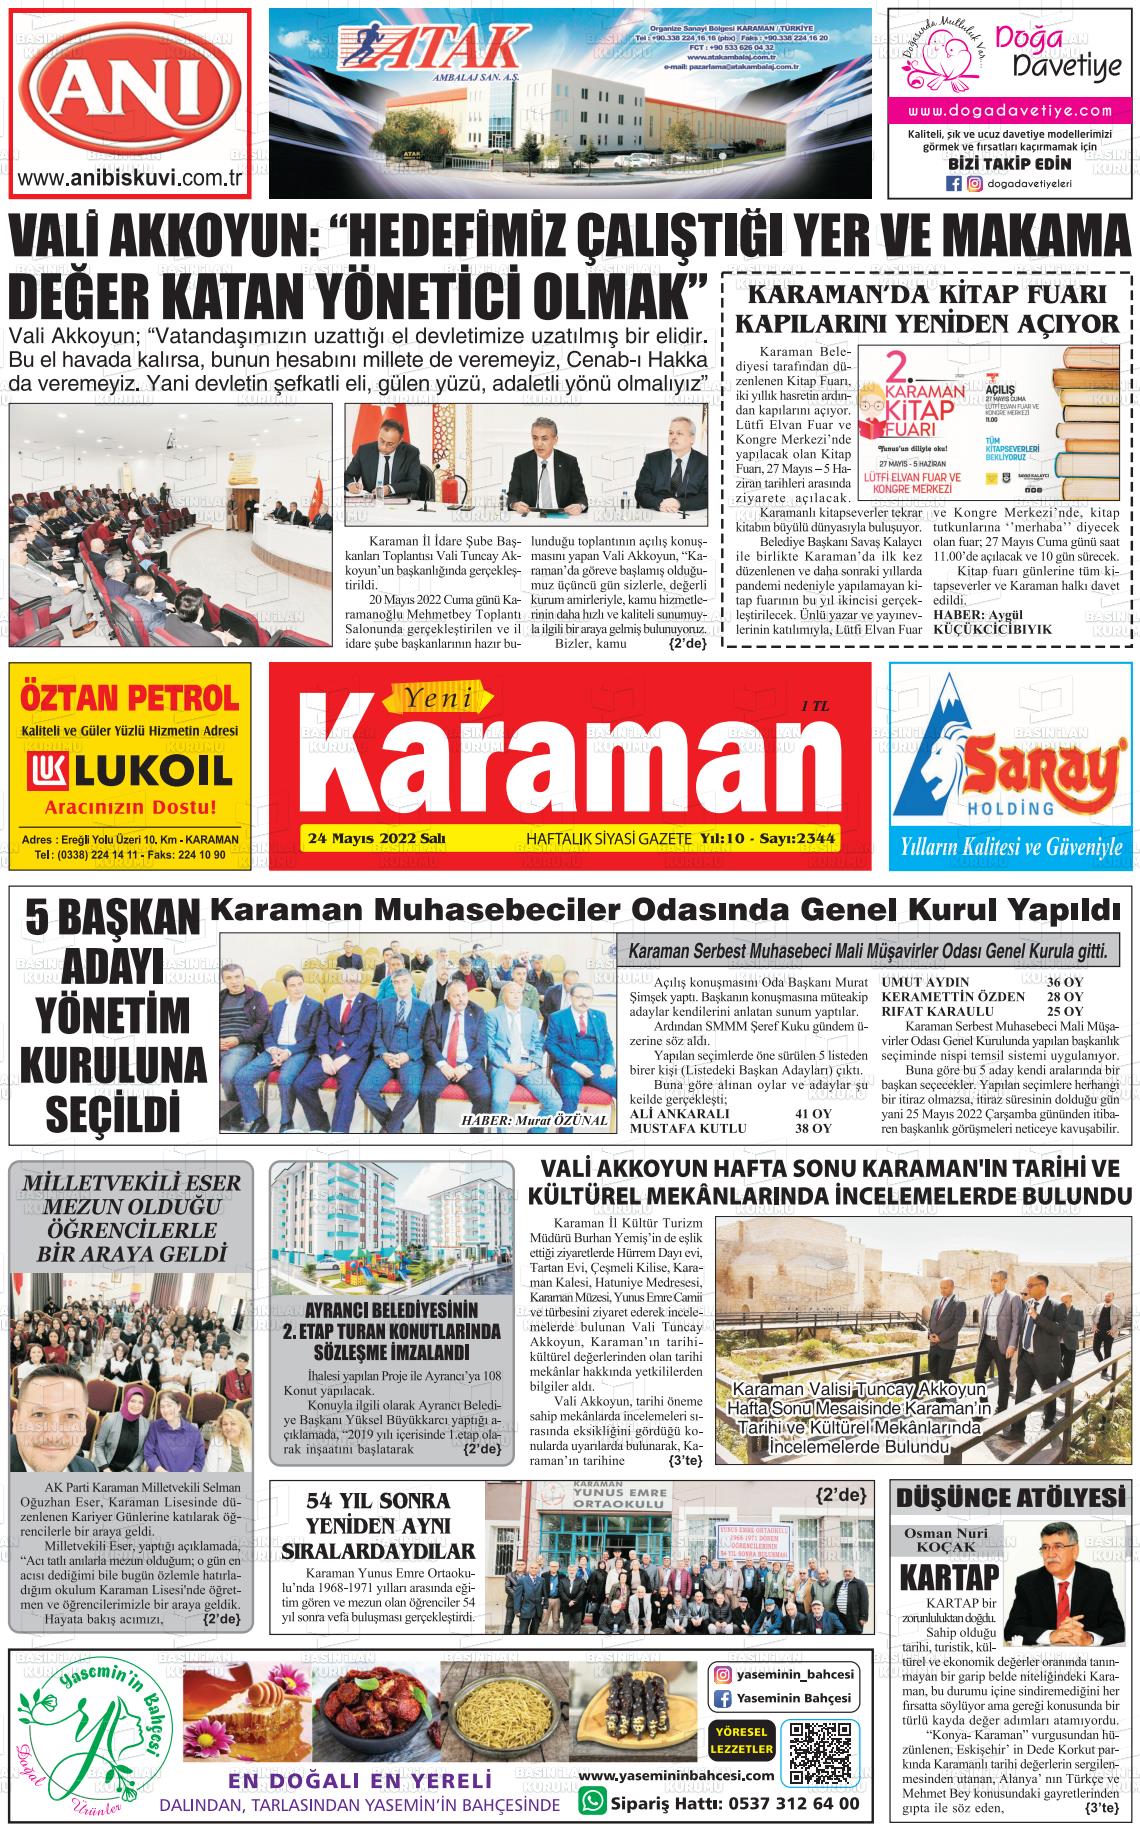 24 Mayıs 2022 Yeni Karaman Gazete Manşeti